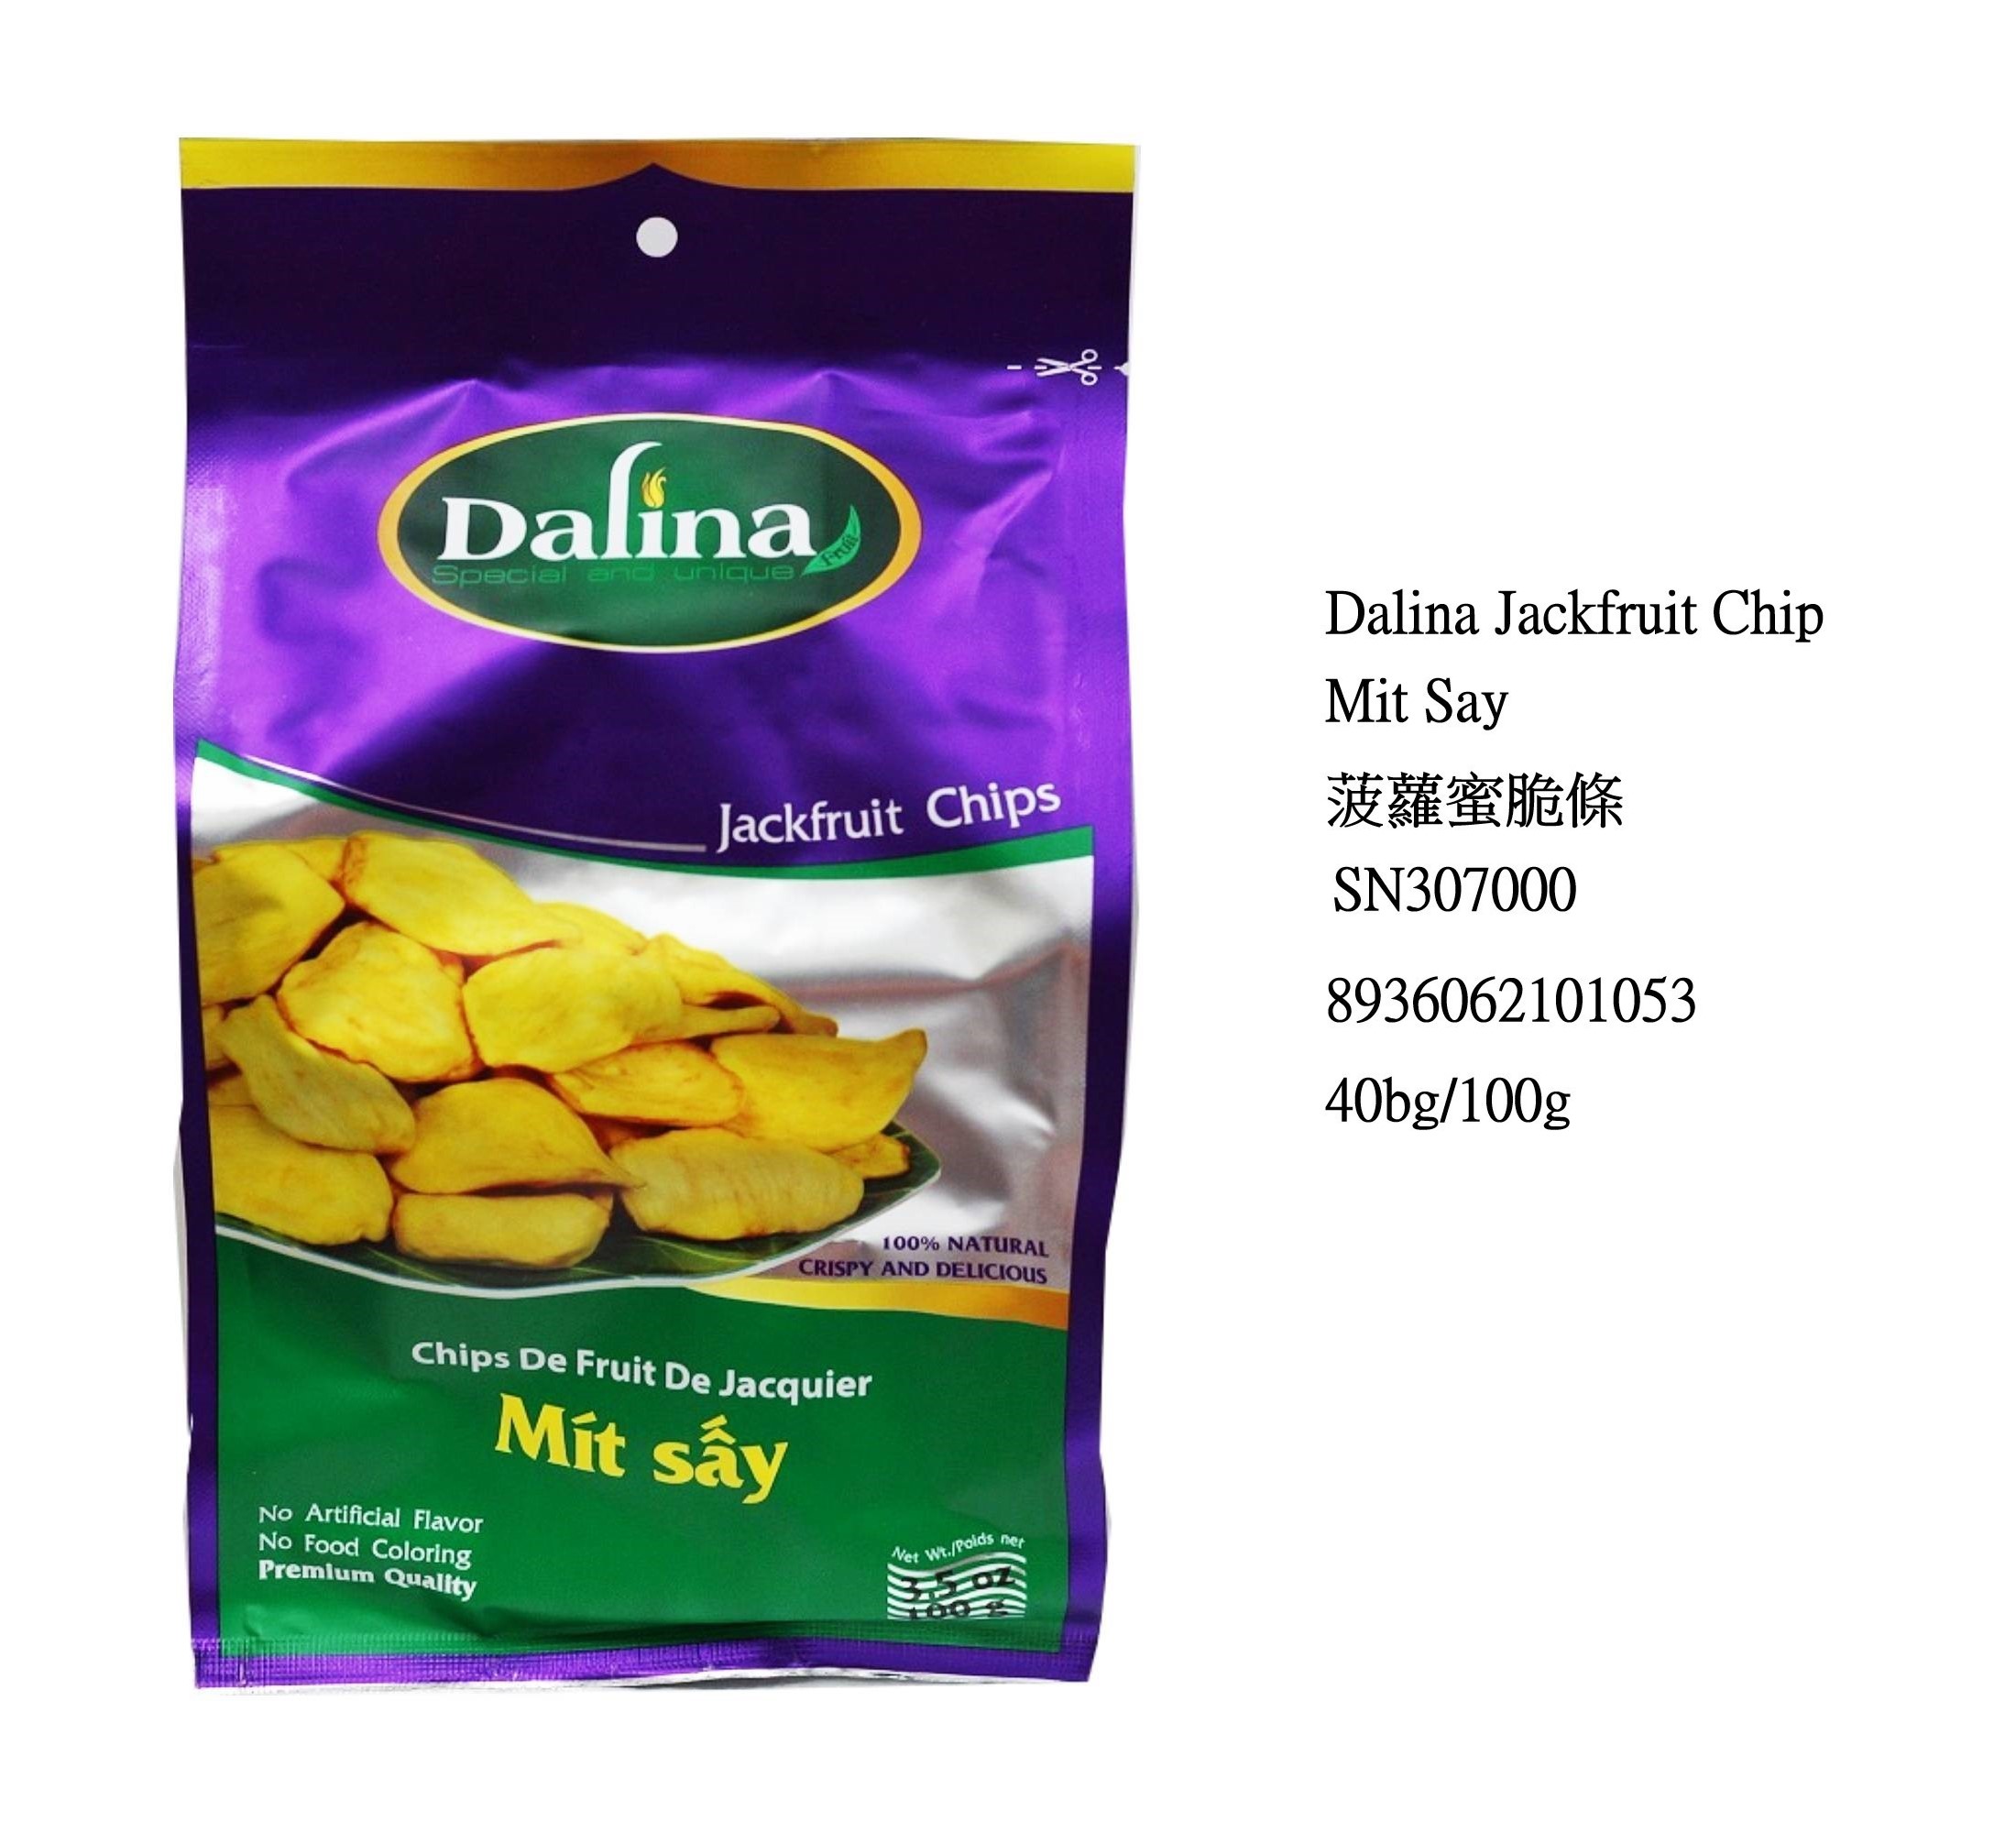 DALINA JACKFRUIT CHIPS MIT SAY SN307000